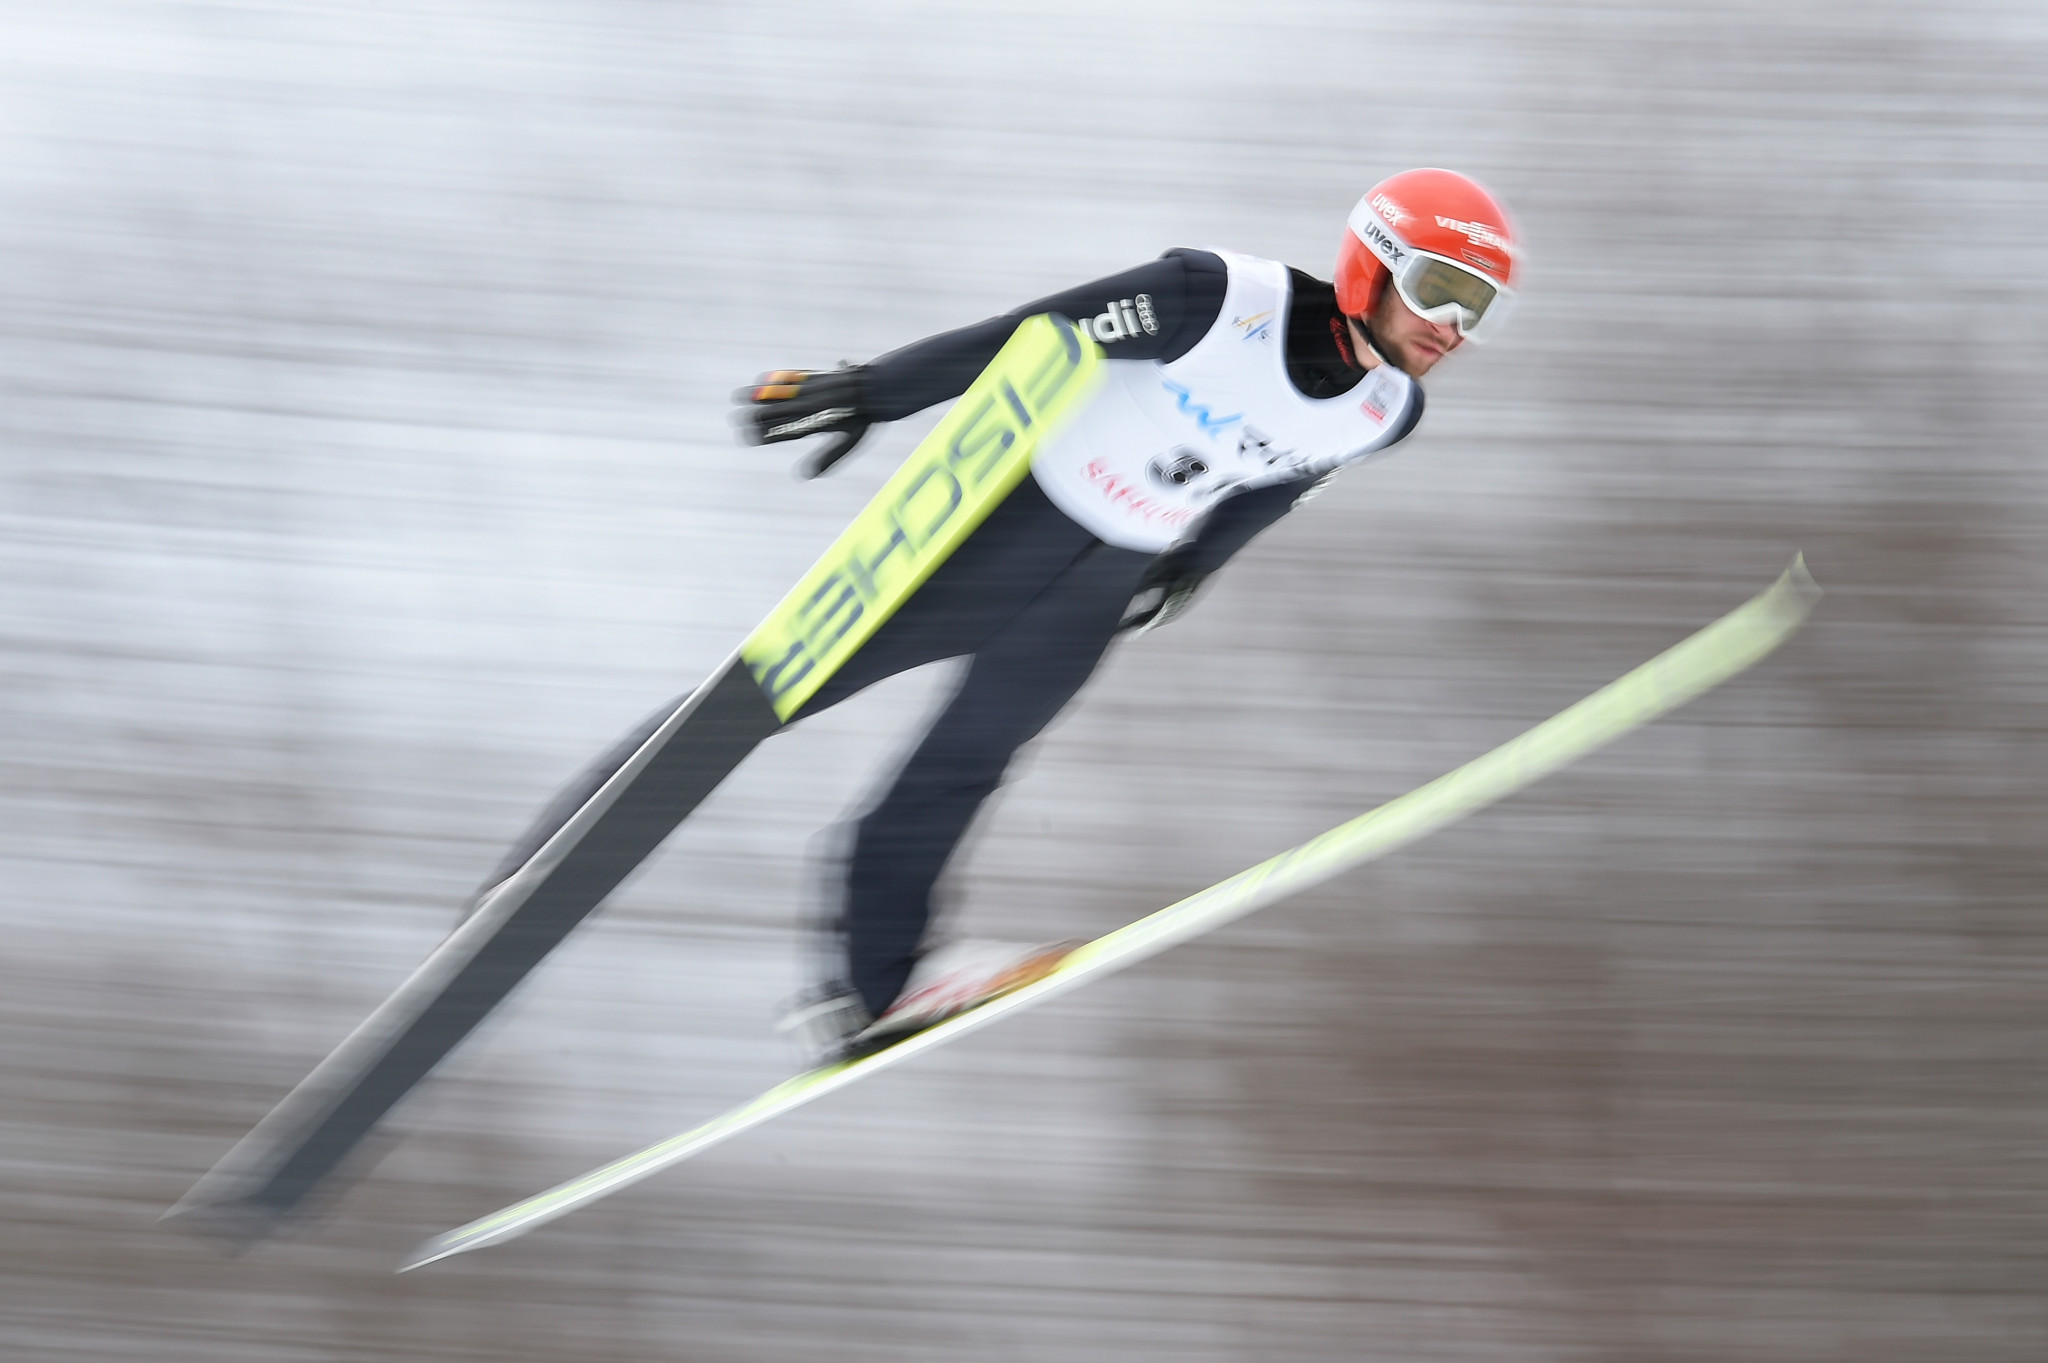 Eisenbichler bidding to continue fine start to Ski Jumping World Cup season in Ruka